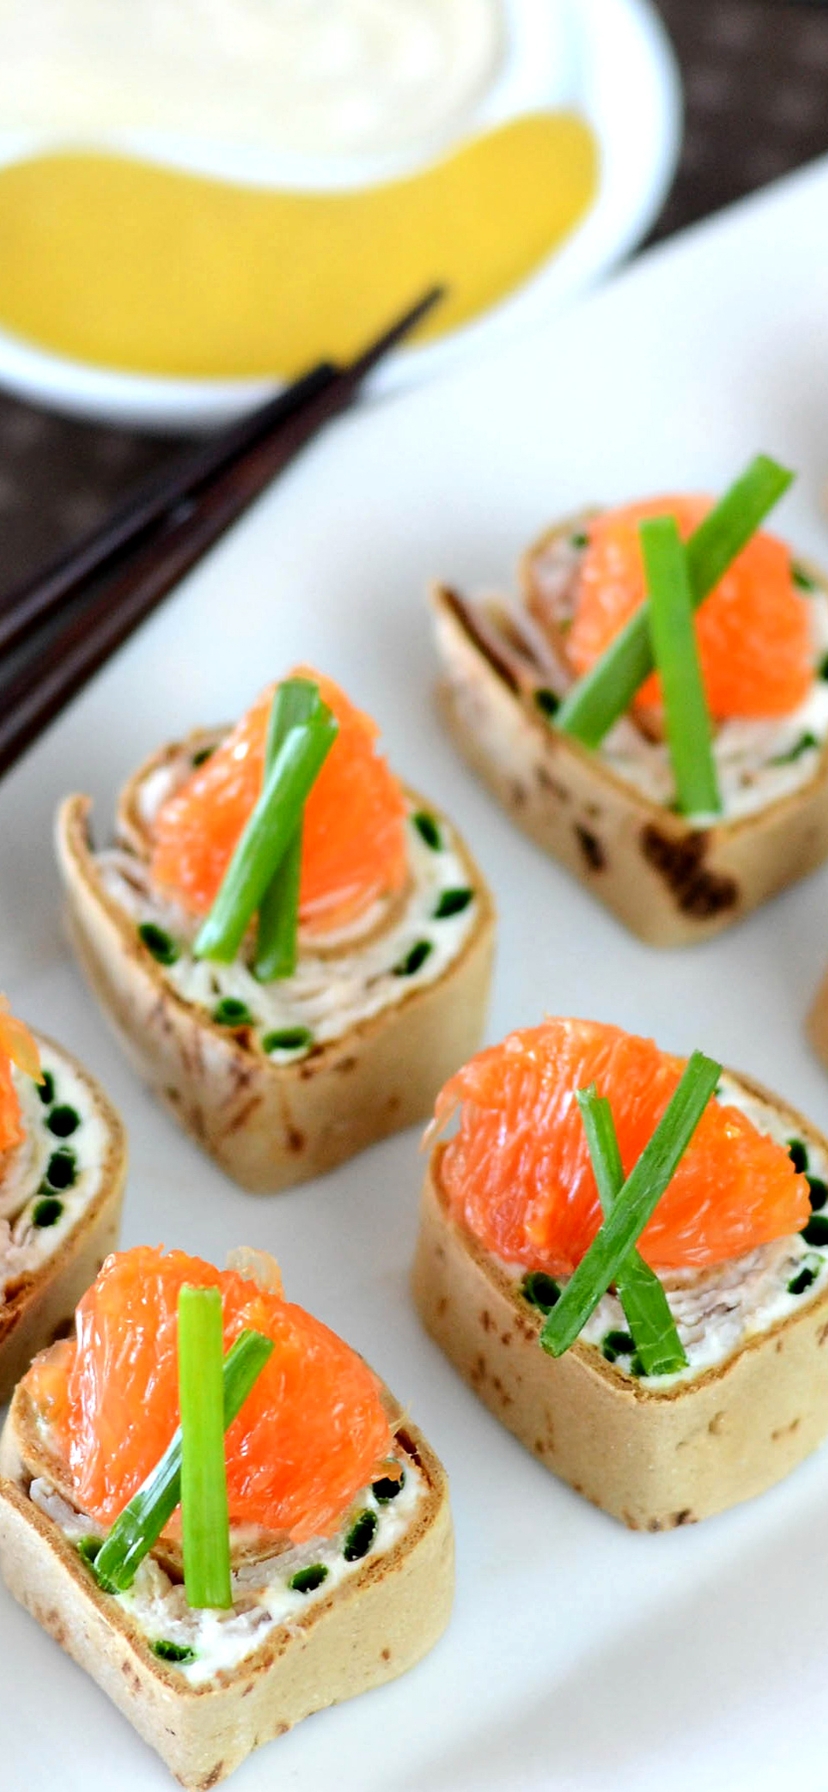 Картинка: Суши, рыба, палочки, лук, зелень, соус